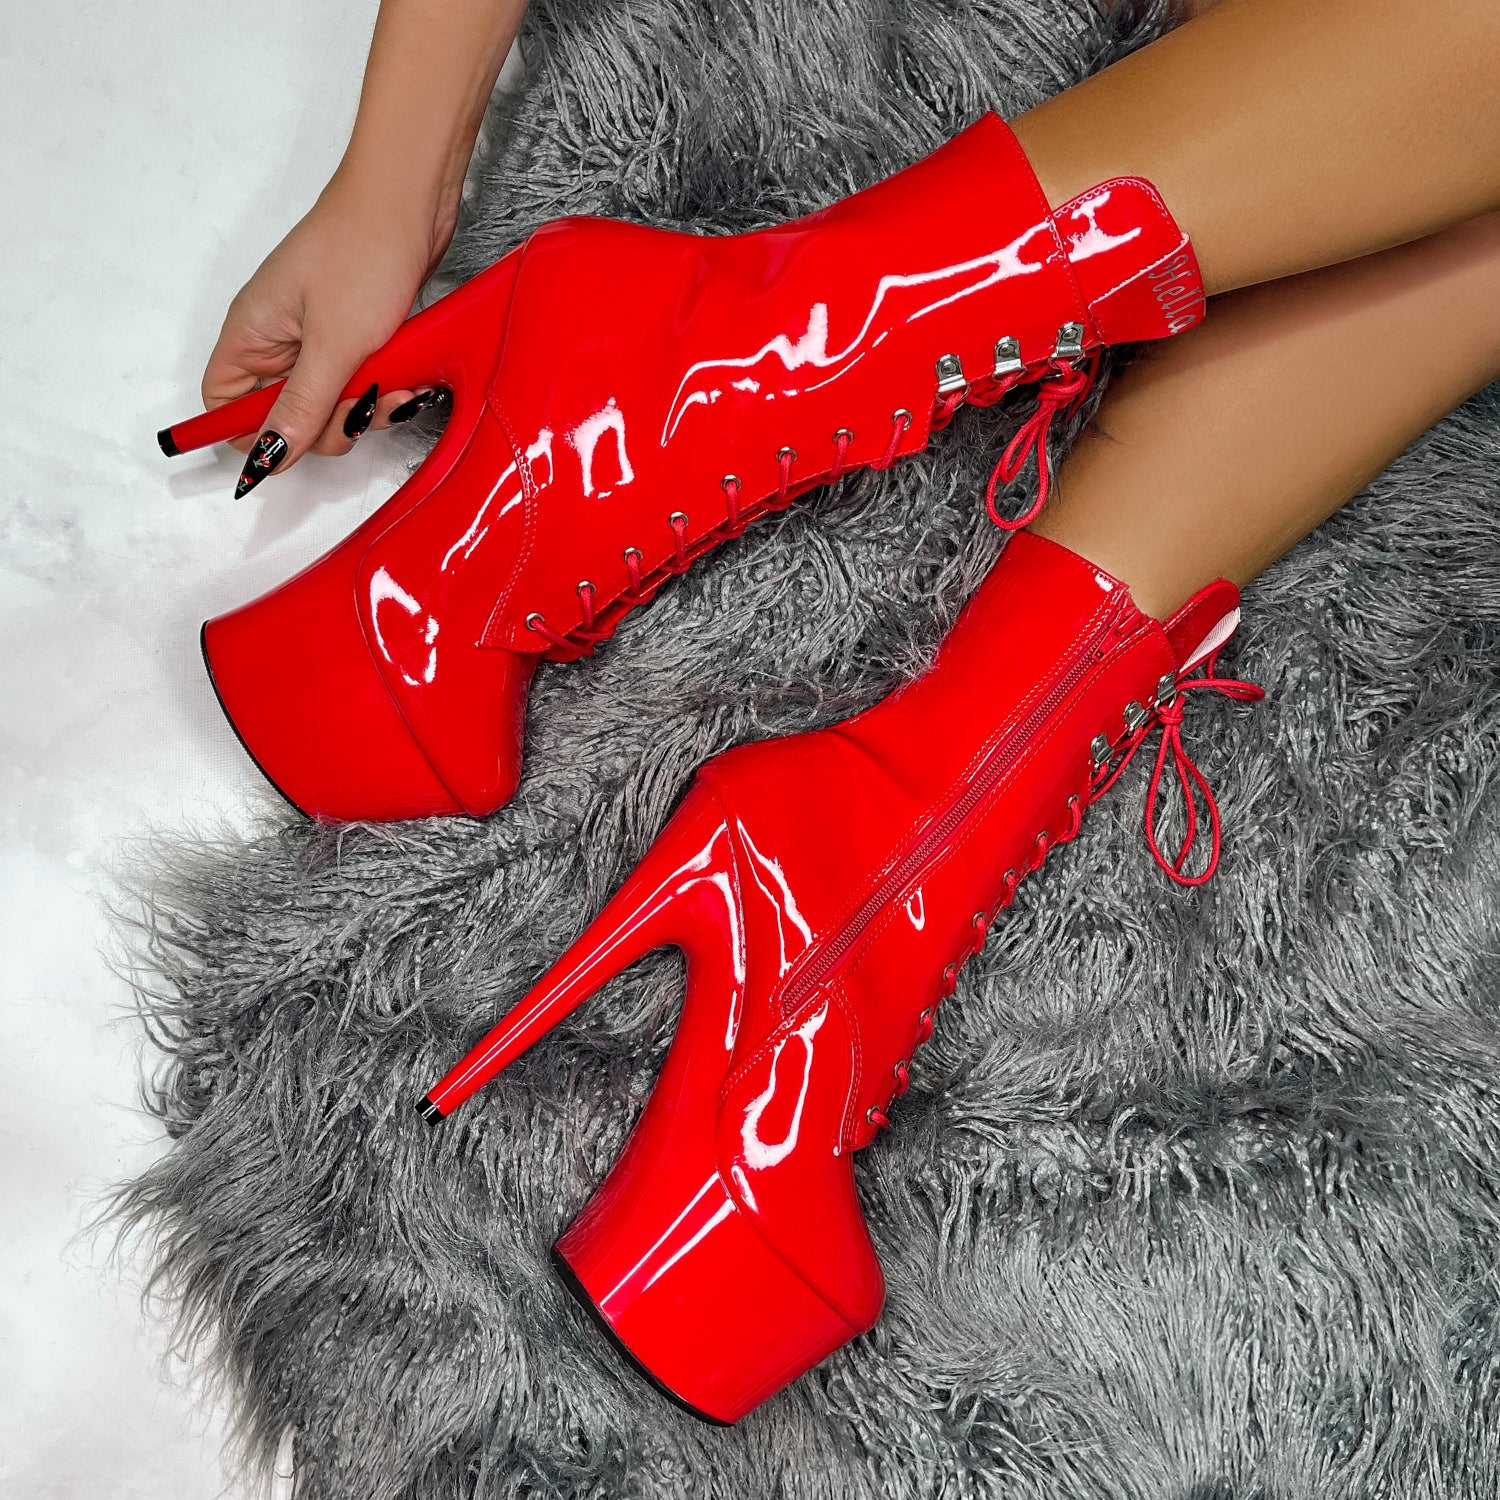 LipKit_Cherry_Pie_Boot_Red_7_inch_stripper_shoes_Hella_Heels_